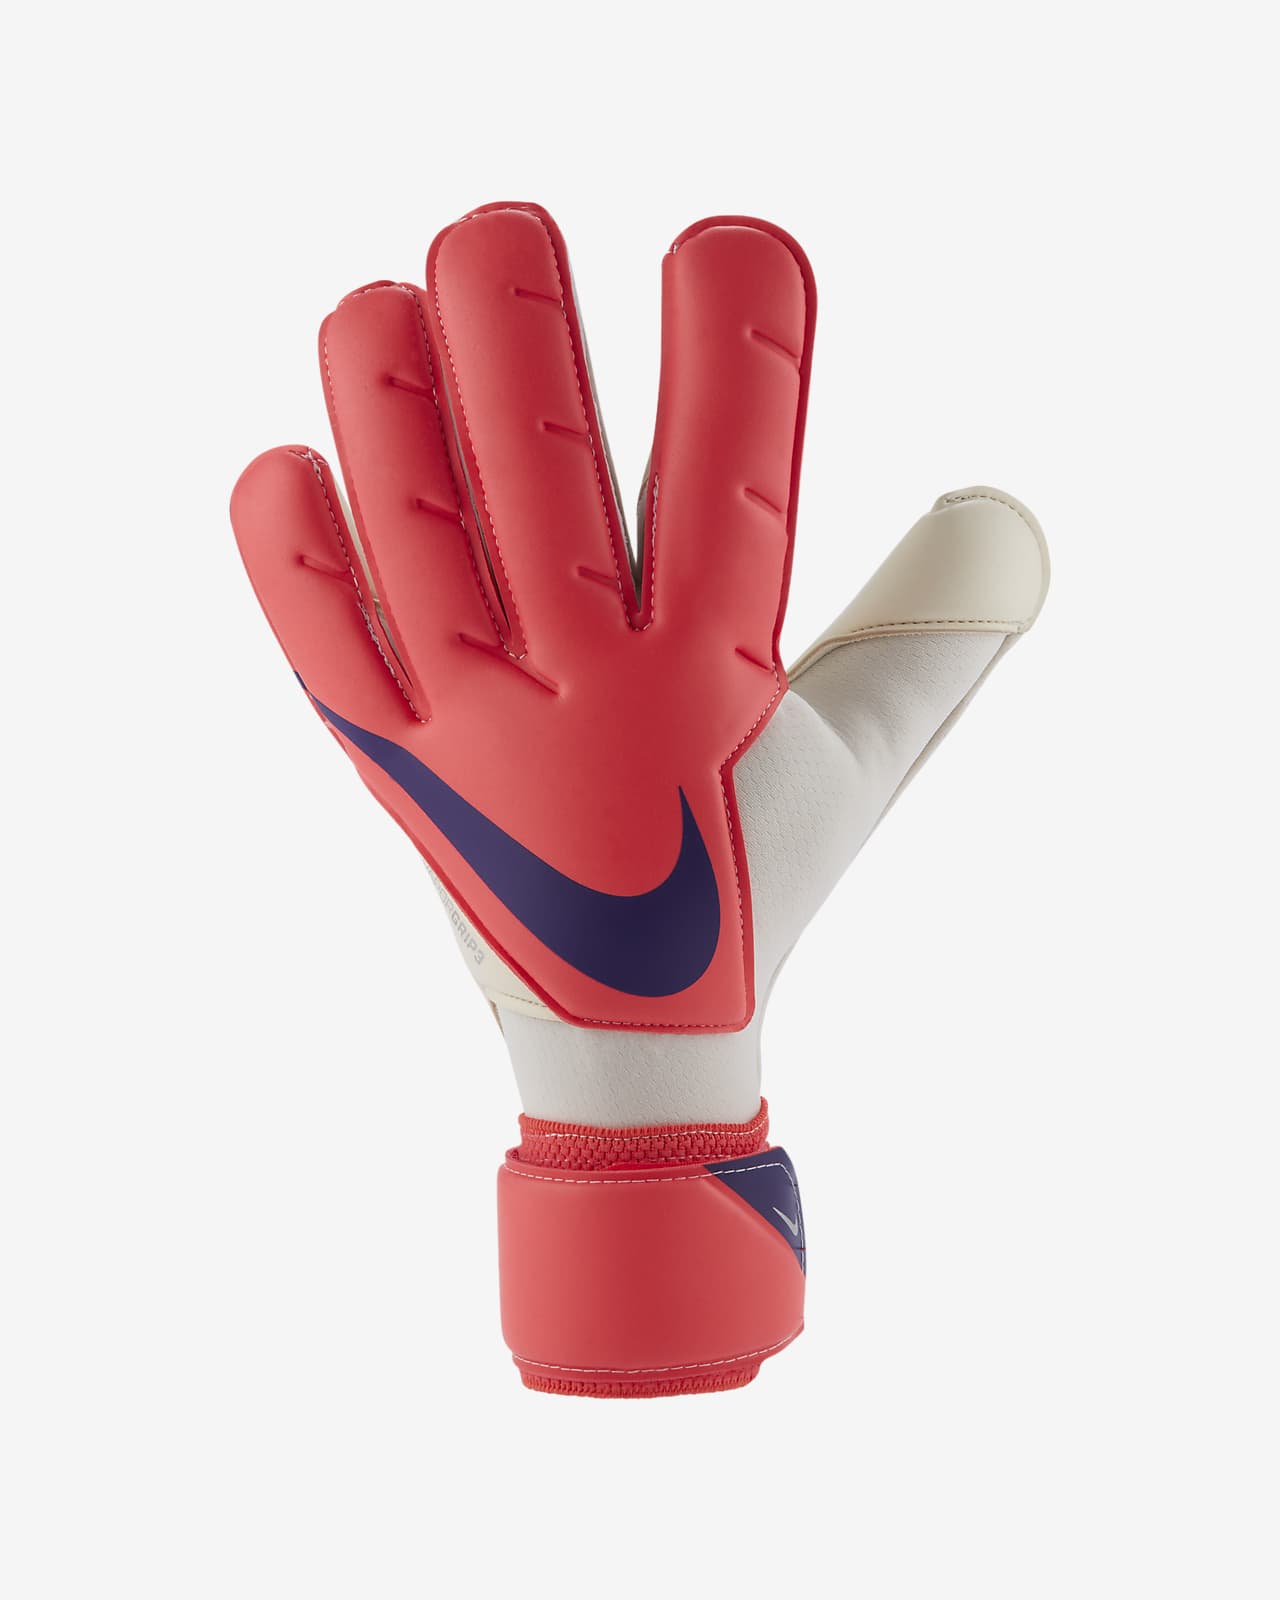 nike goalkeeper gloves size 7